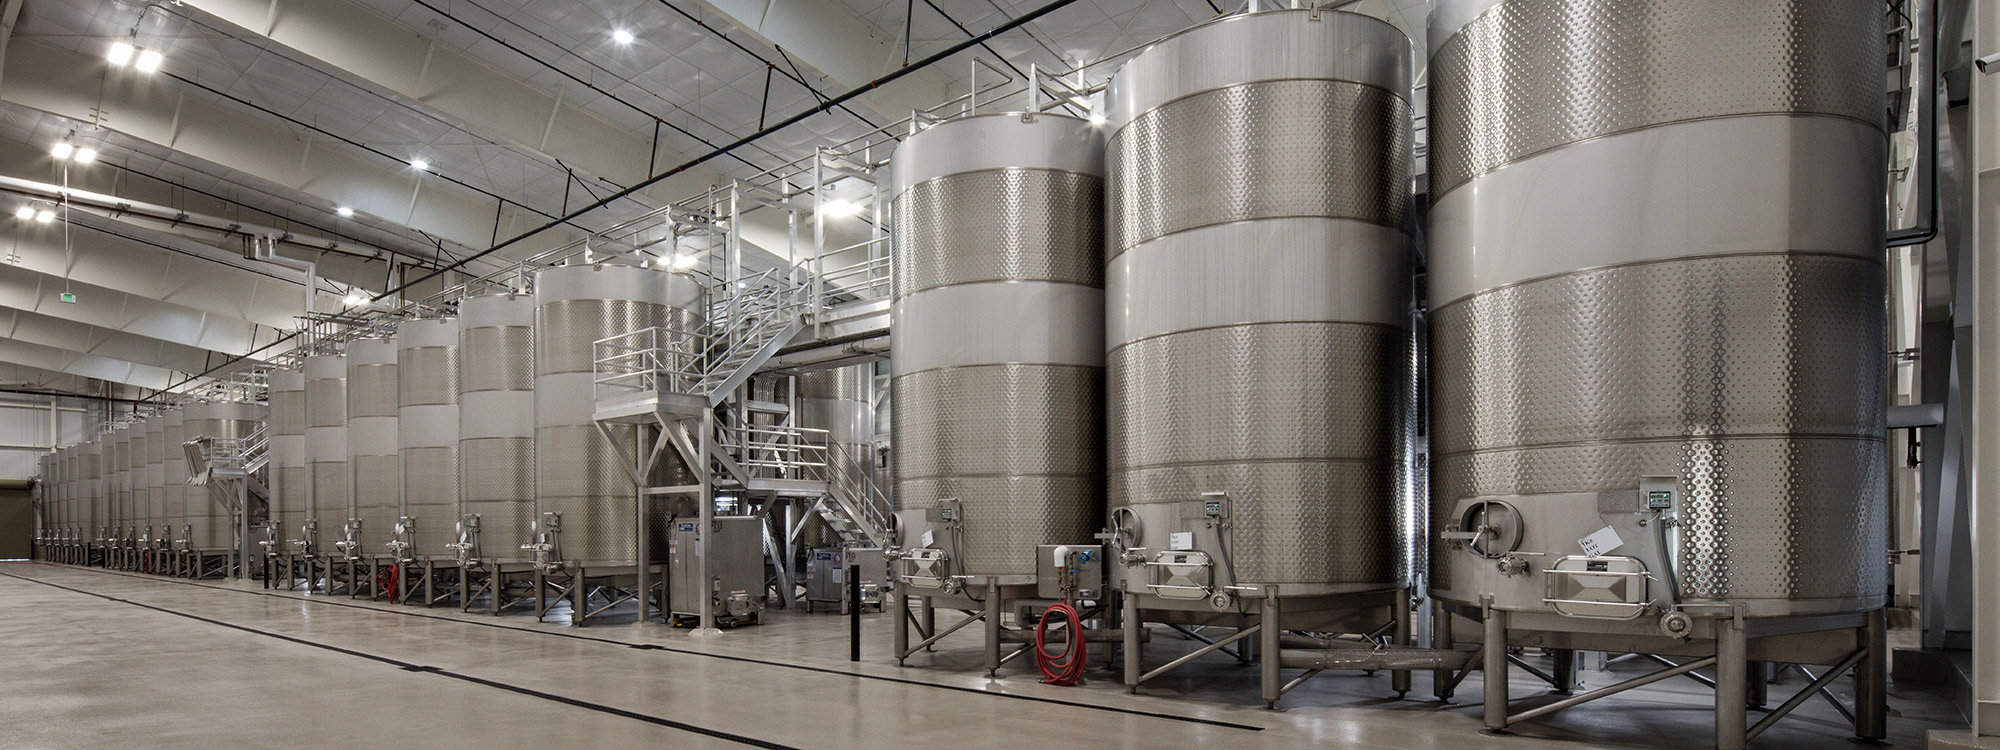 Wine Processing Plant Contractors - Processing Facility Construction - JW Design & Construction